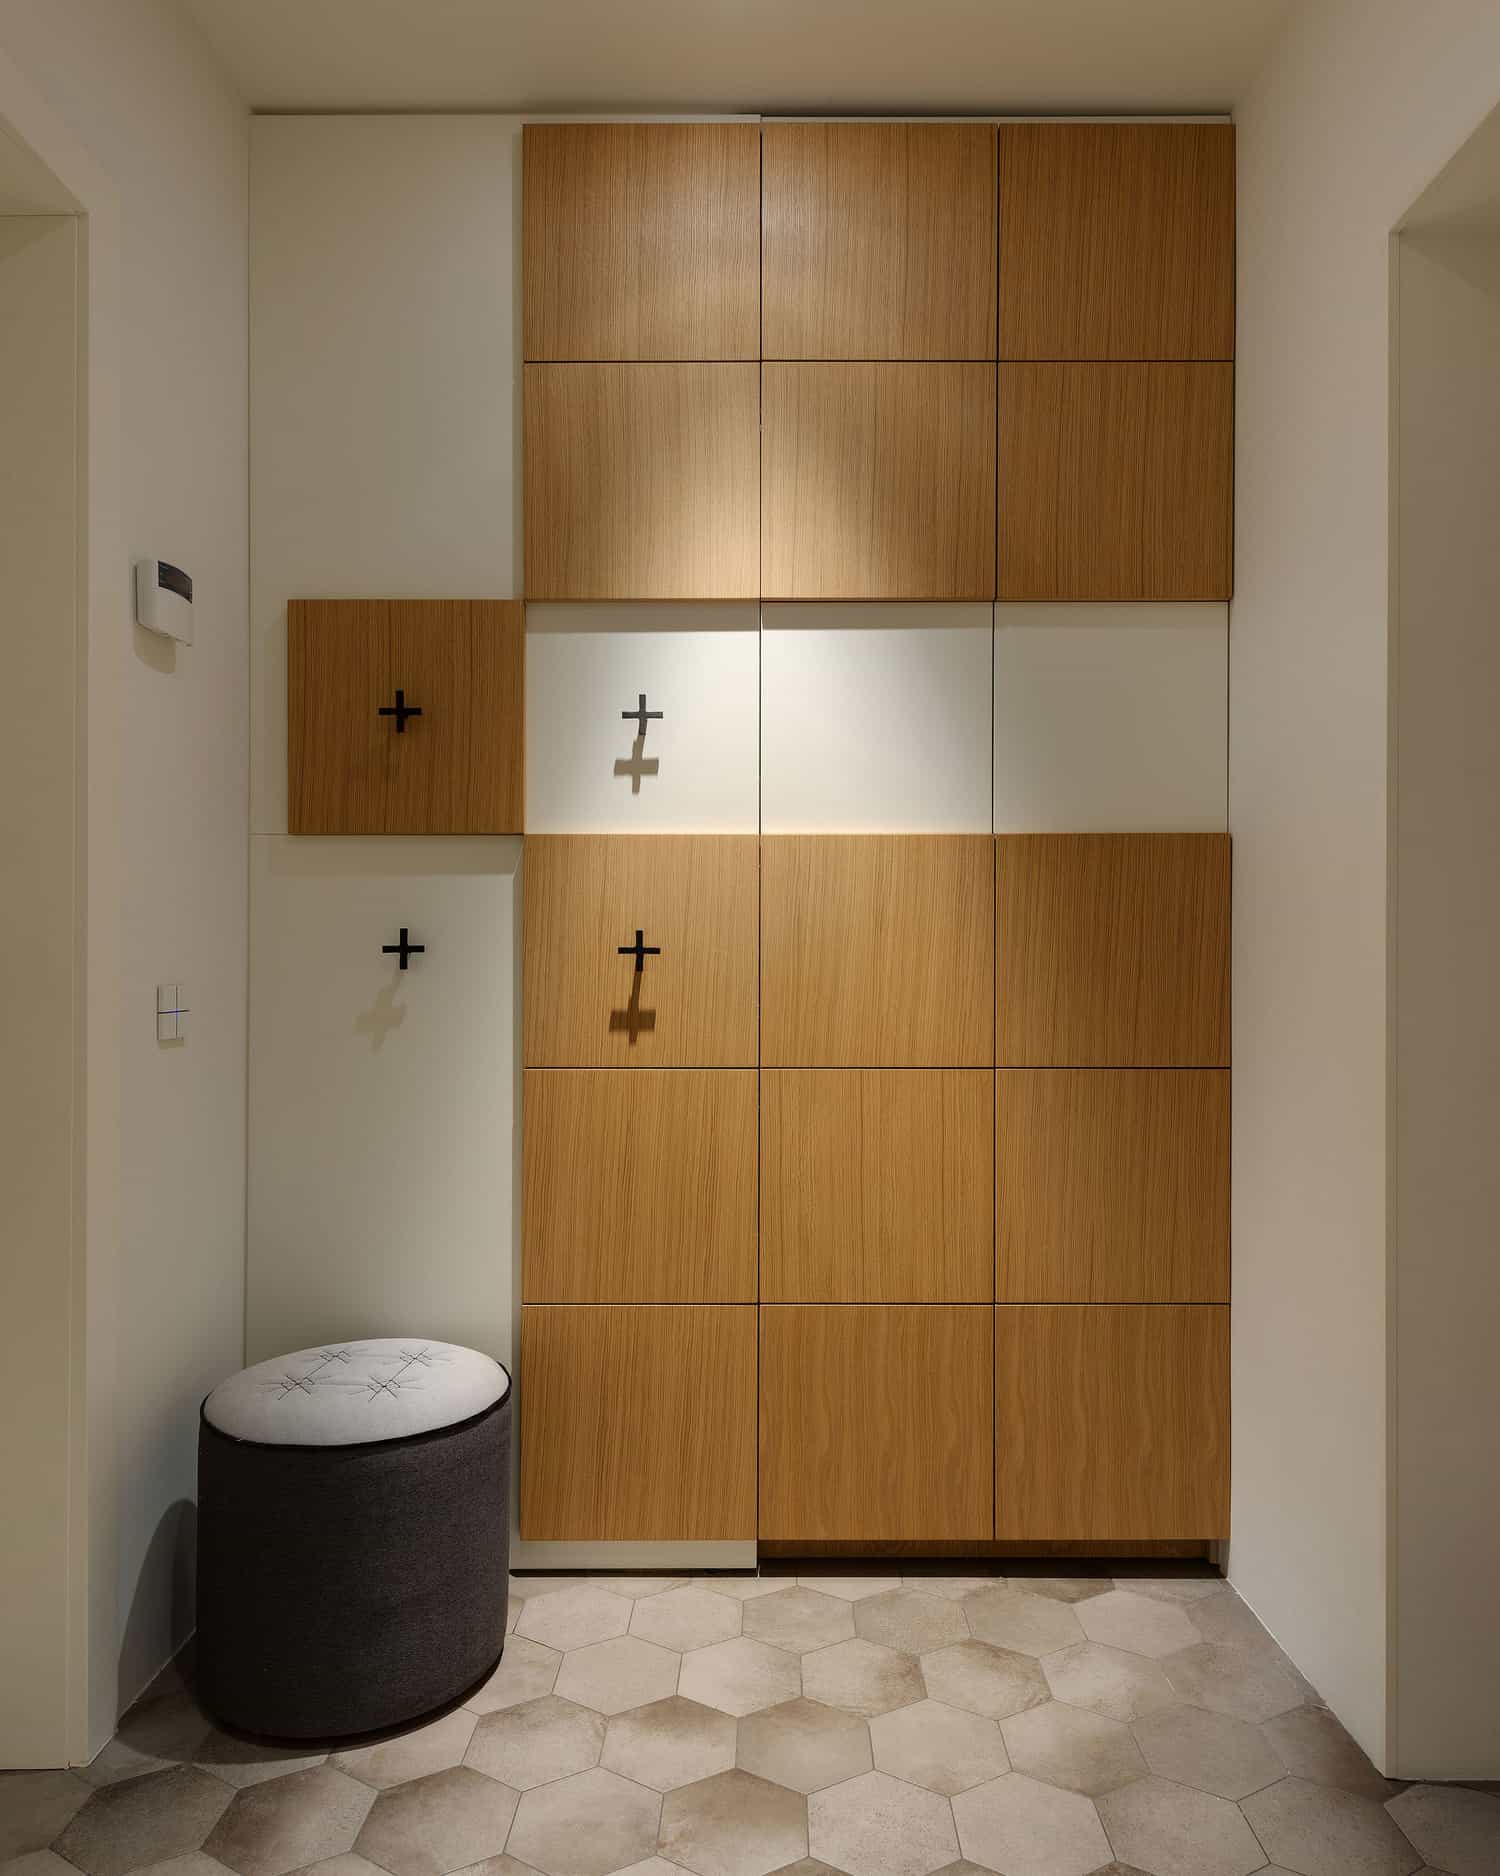 Apartment With Slide-KI Design-26-1 Kindesign